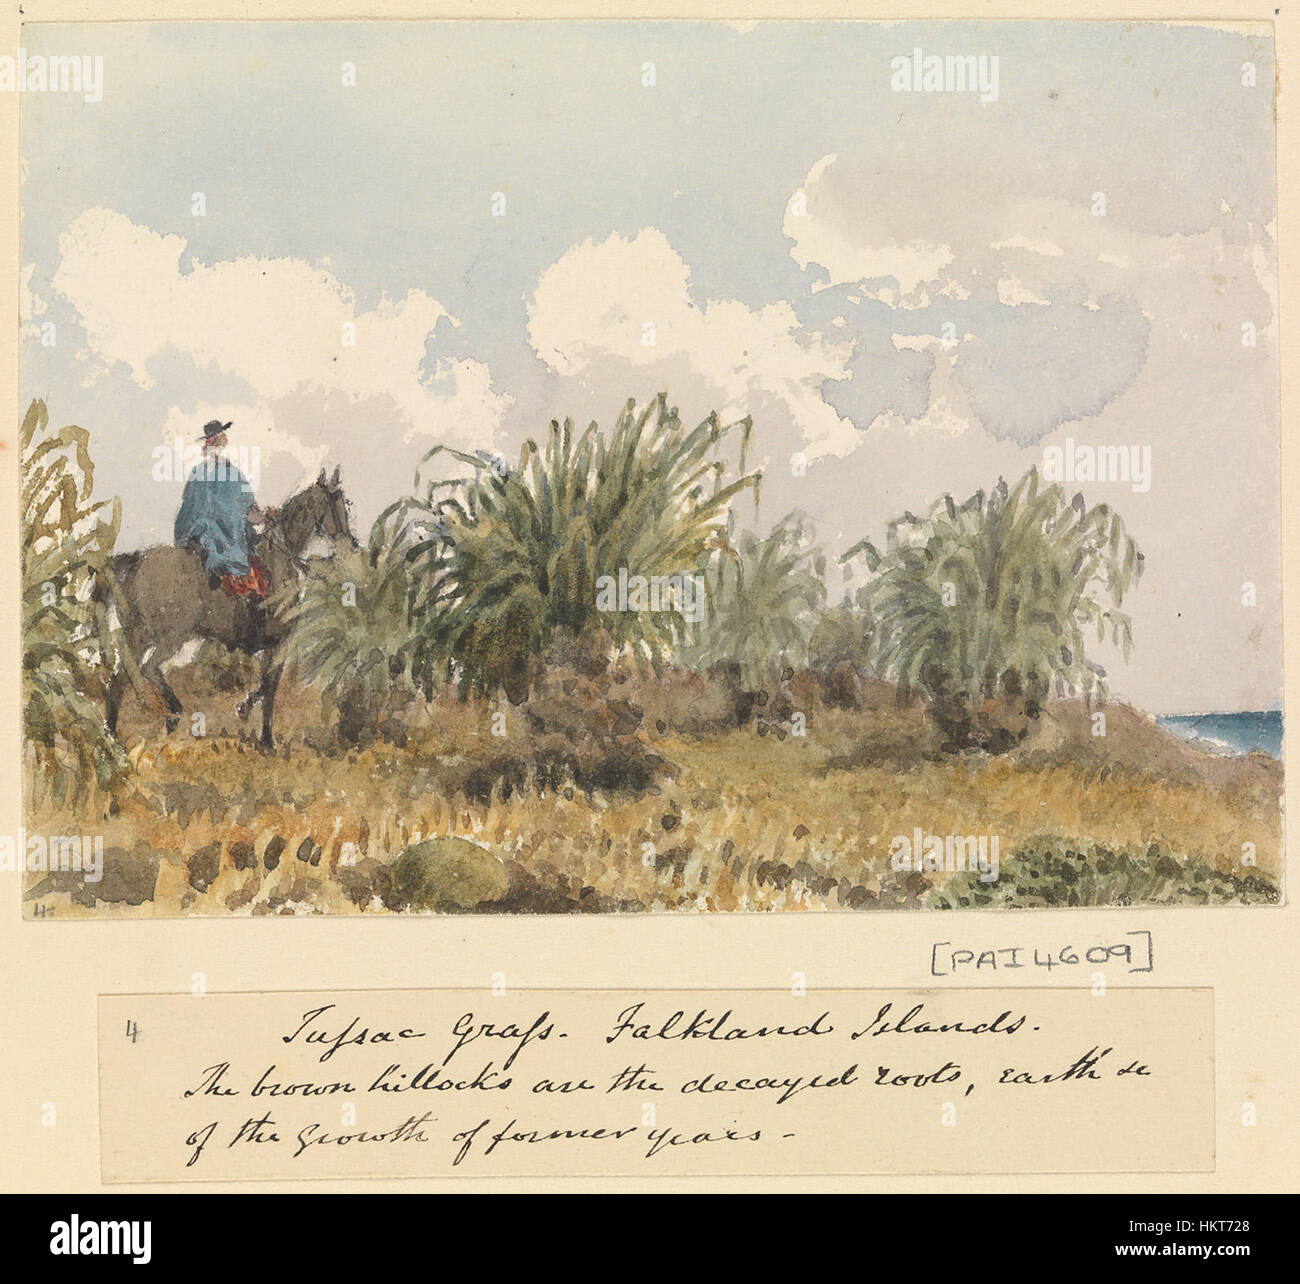 Edward Gennys Fanshawe, Tussac Grass, Falkland Islands Stock Photo